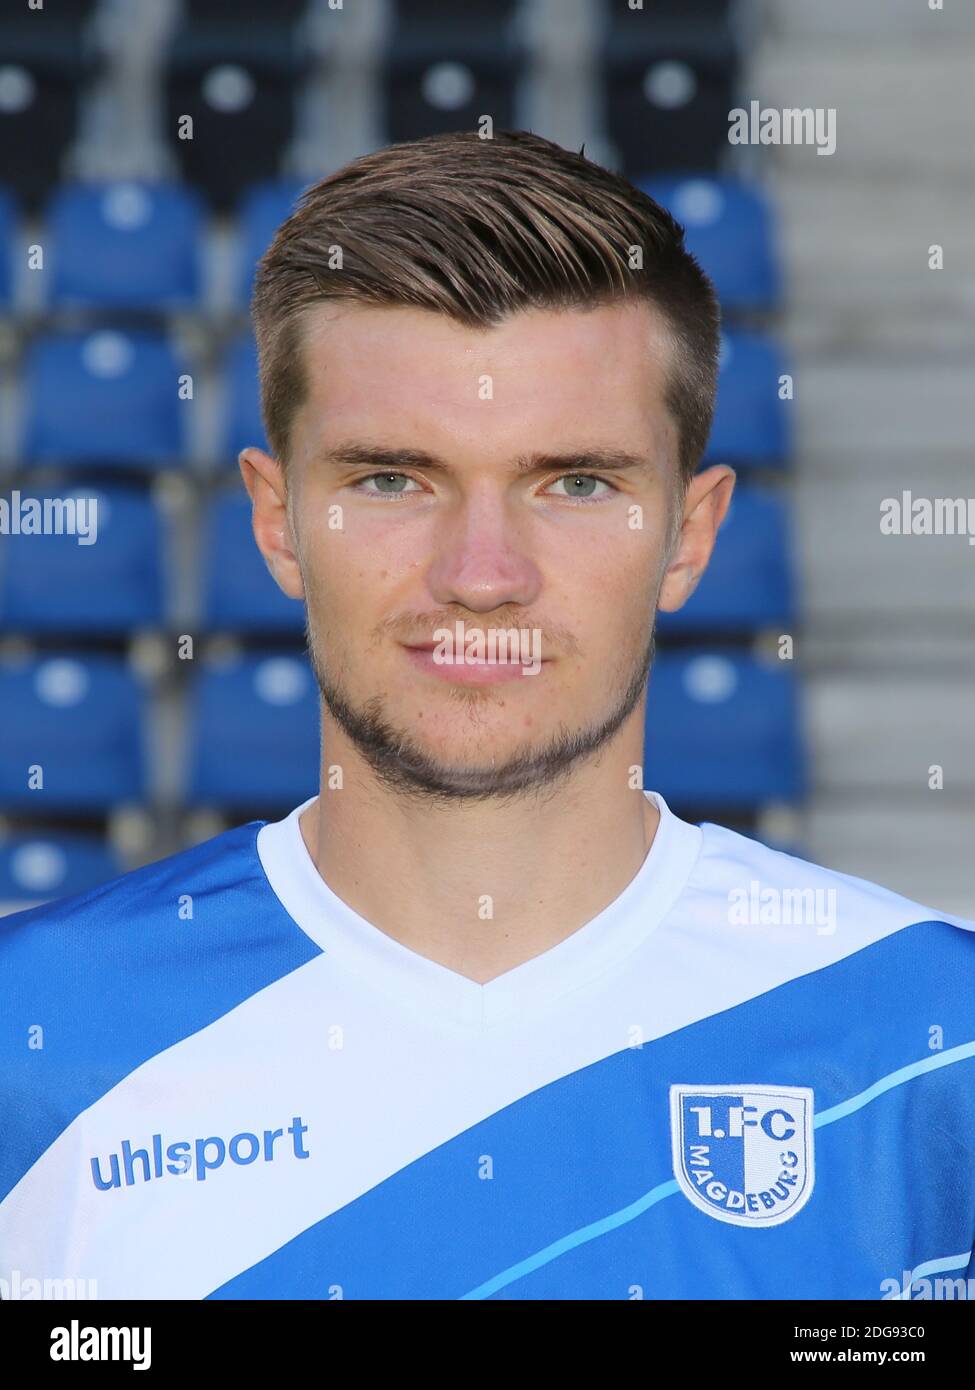 Footballeur björn Rother (1.FC Magdeburg-Saison 2018-19) Banque D'Images